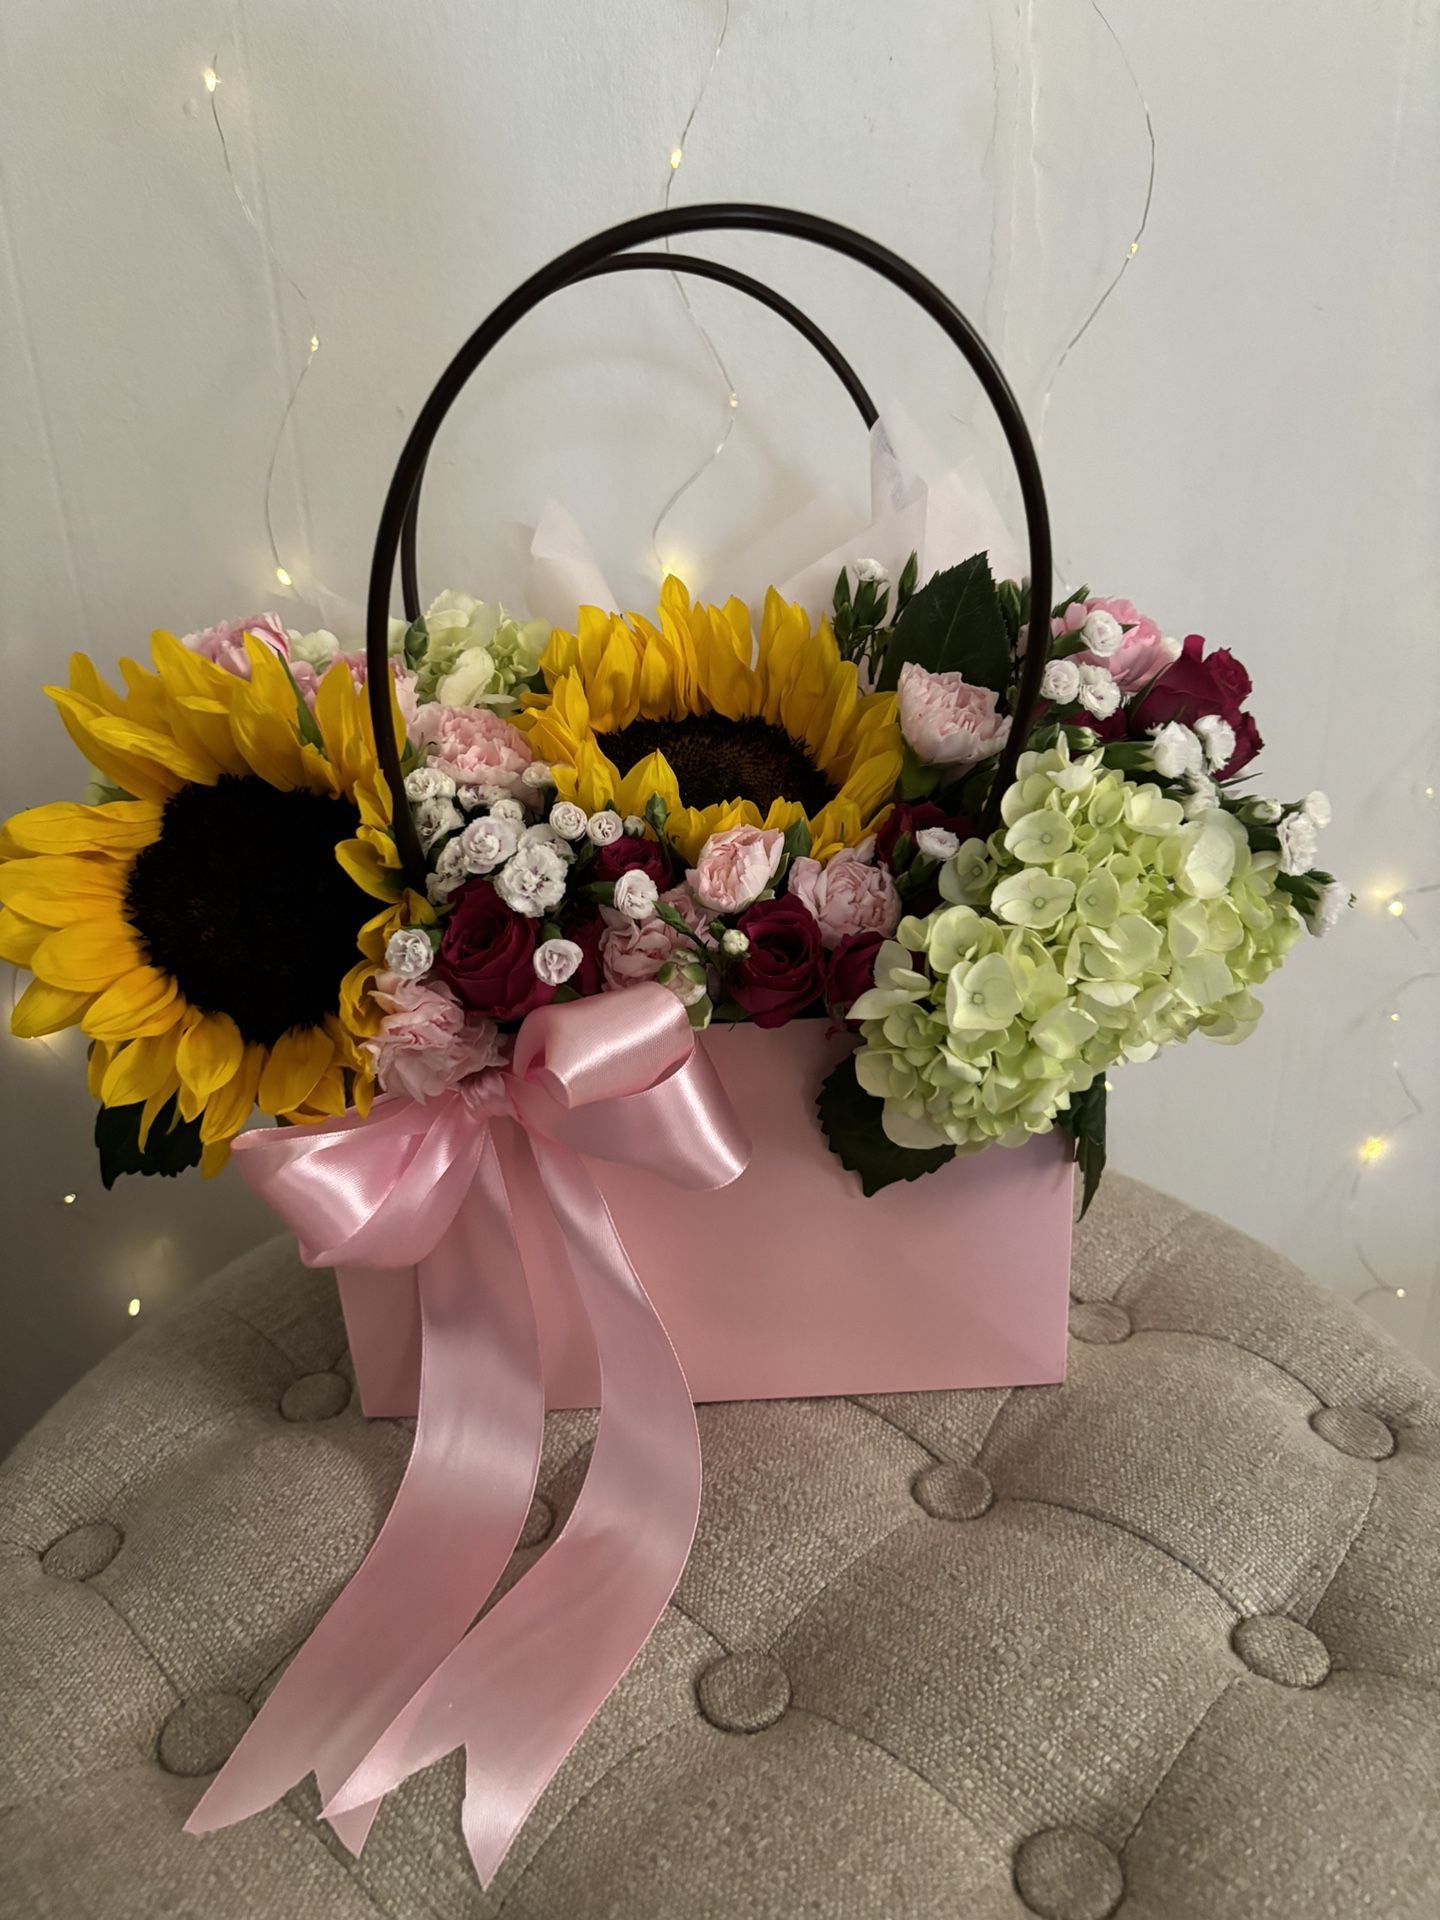 Floral arrangement for mother’s day